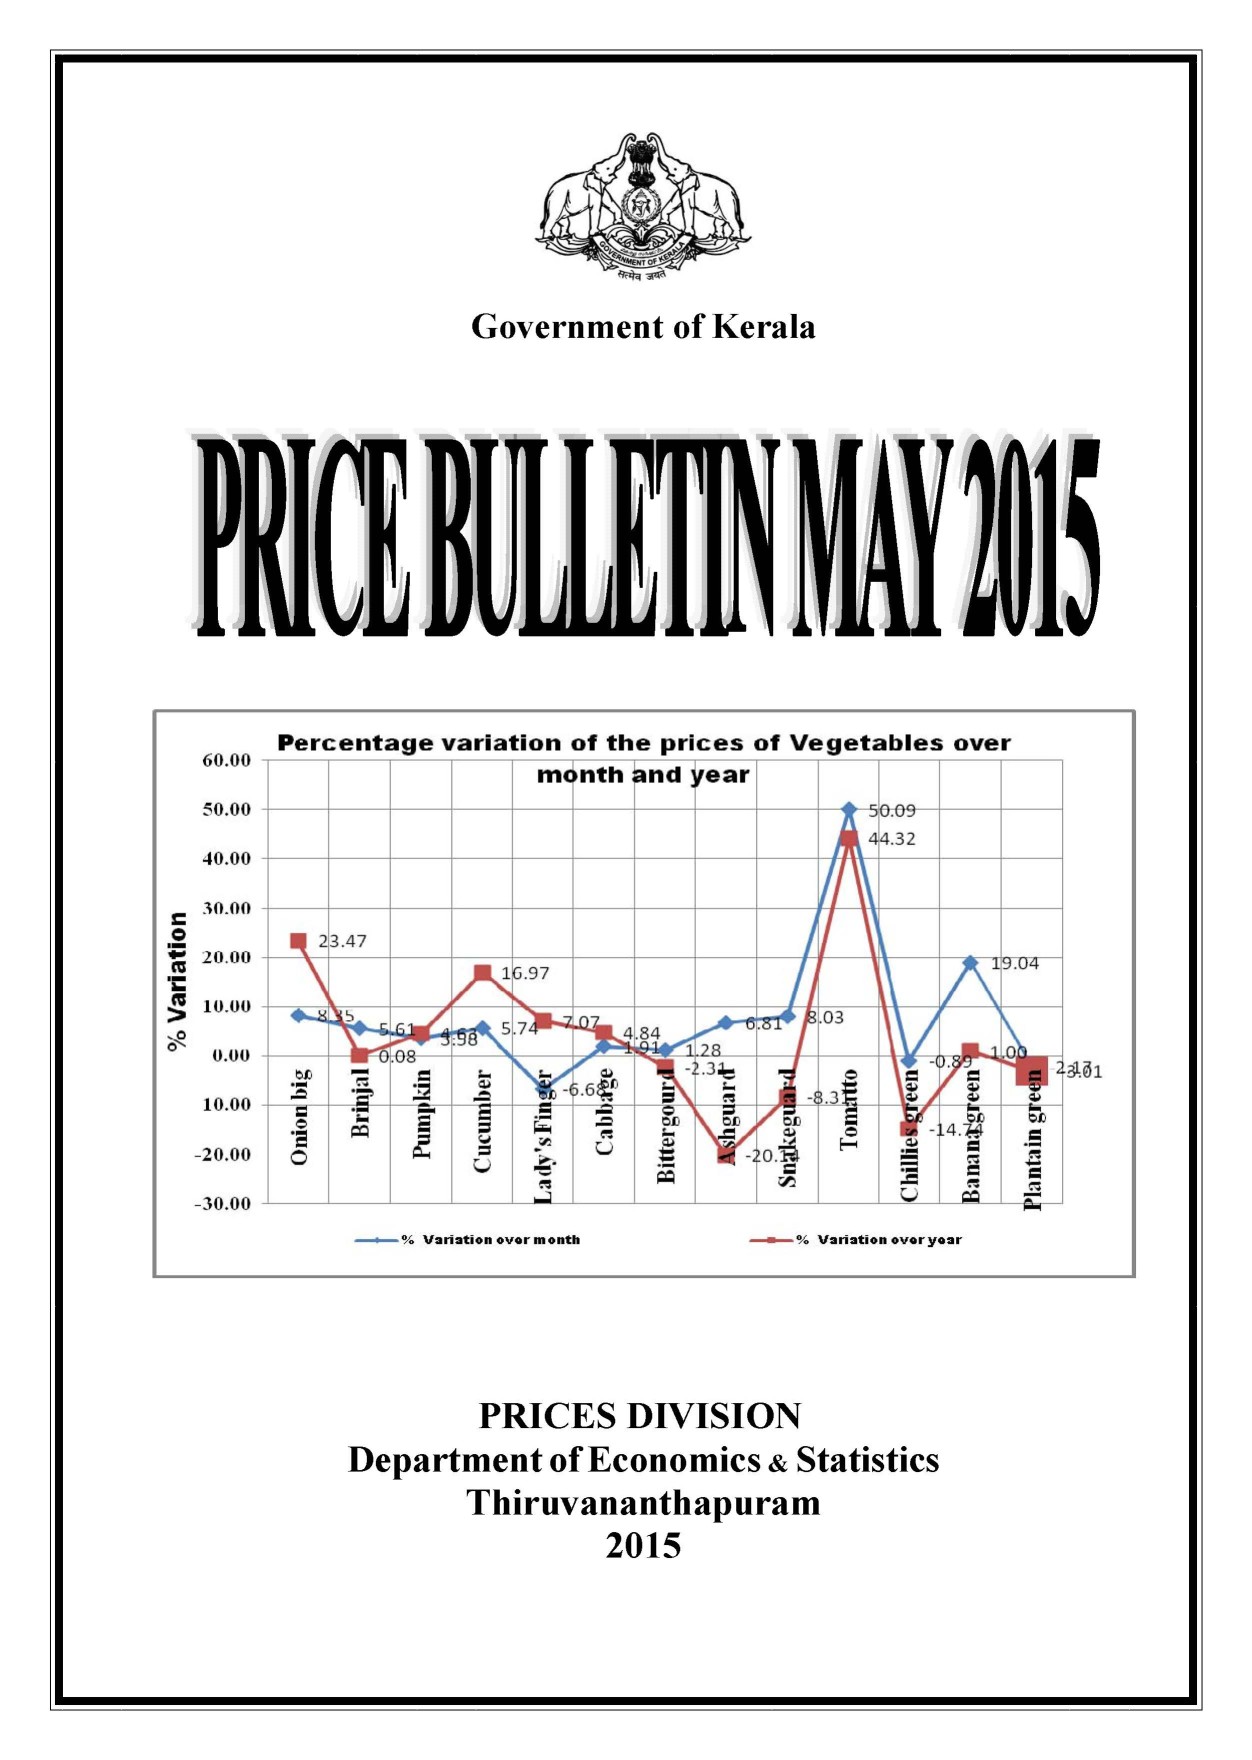 Price Bulletin May 2015